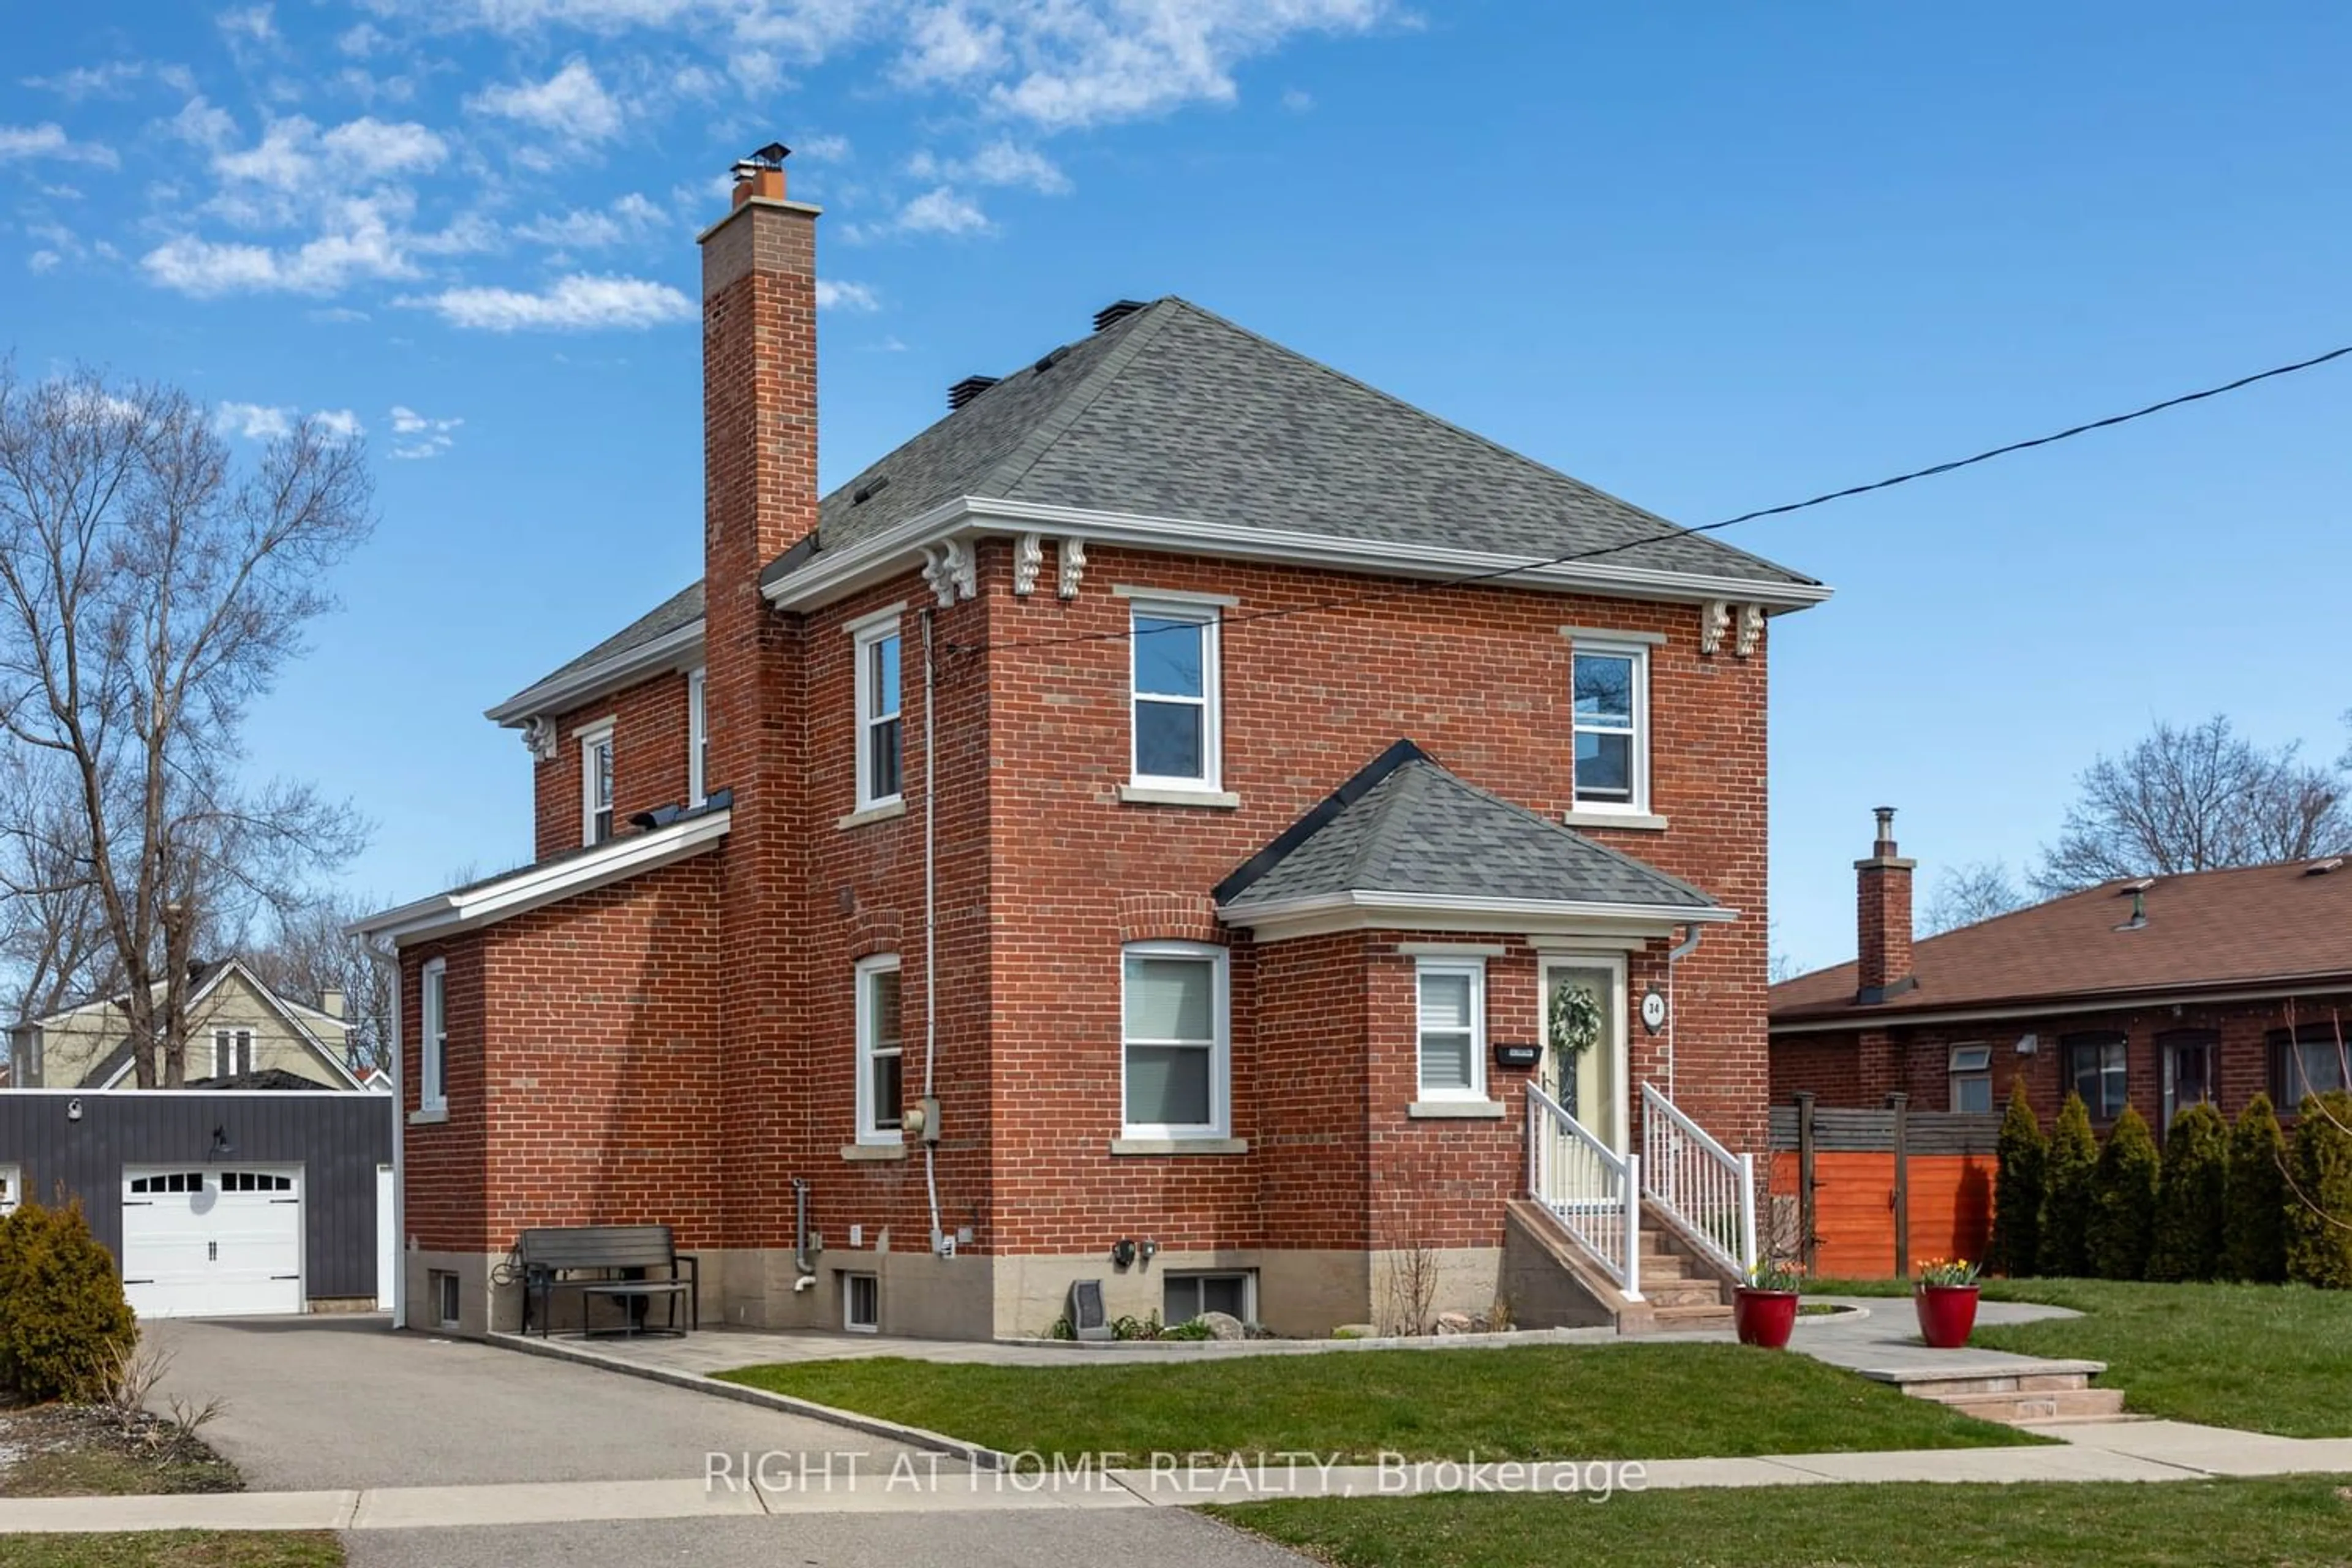 Home with brick exterior material for 34 Kecala Rd, Toronto Ontario M1P 1K6